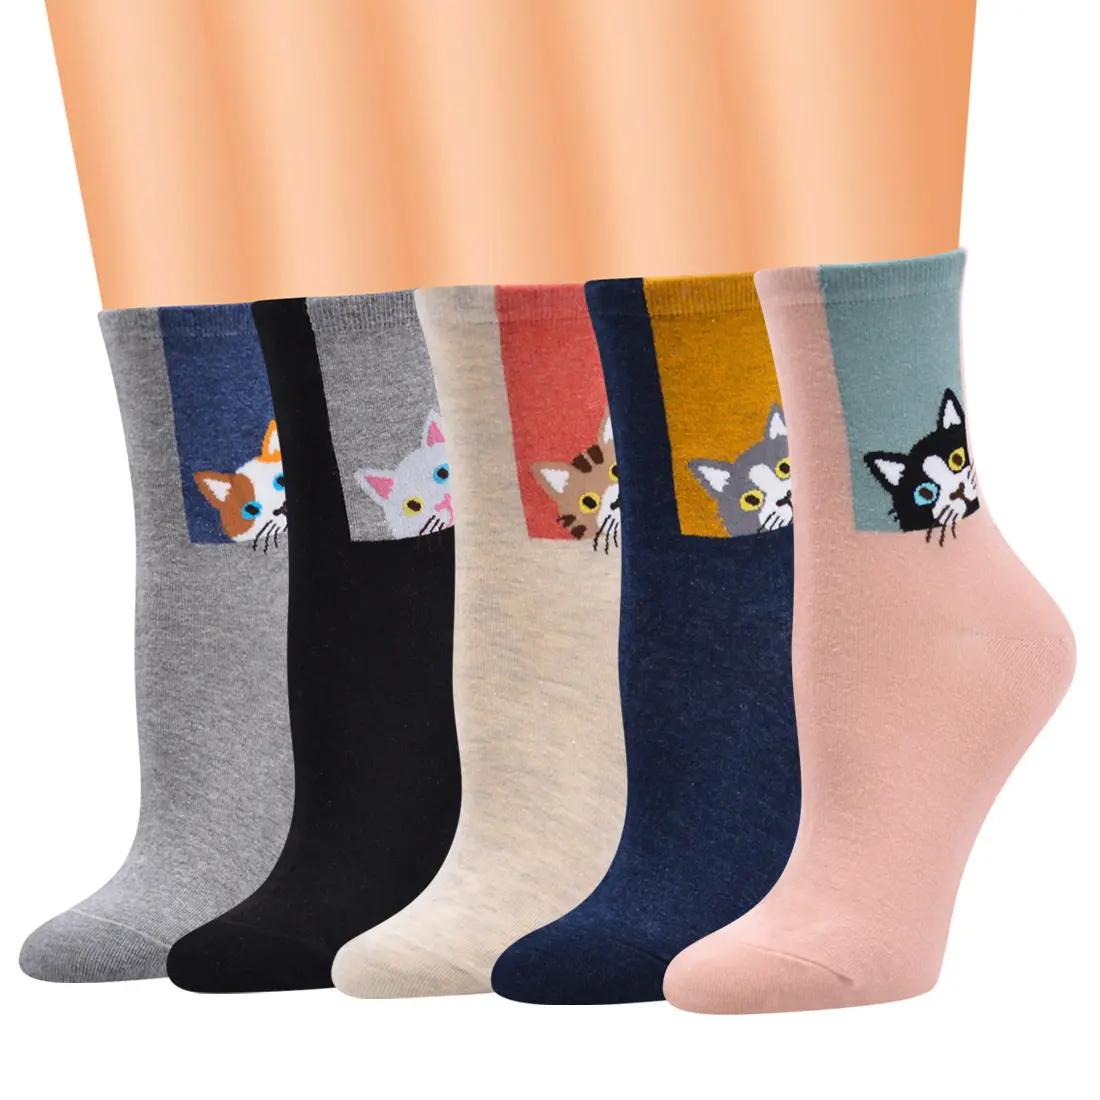 Funny cotton woman winter sock cat animal pattern mid calf crew sock 12 pairs set Korean socks